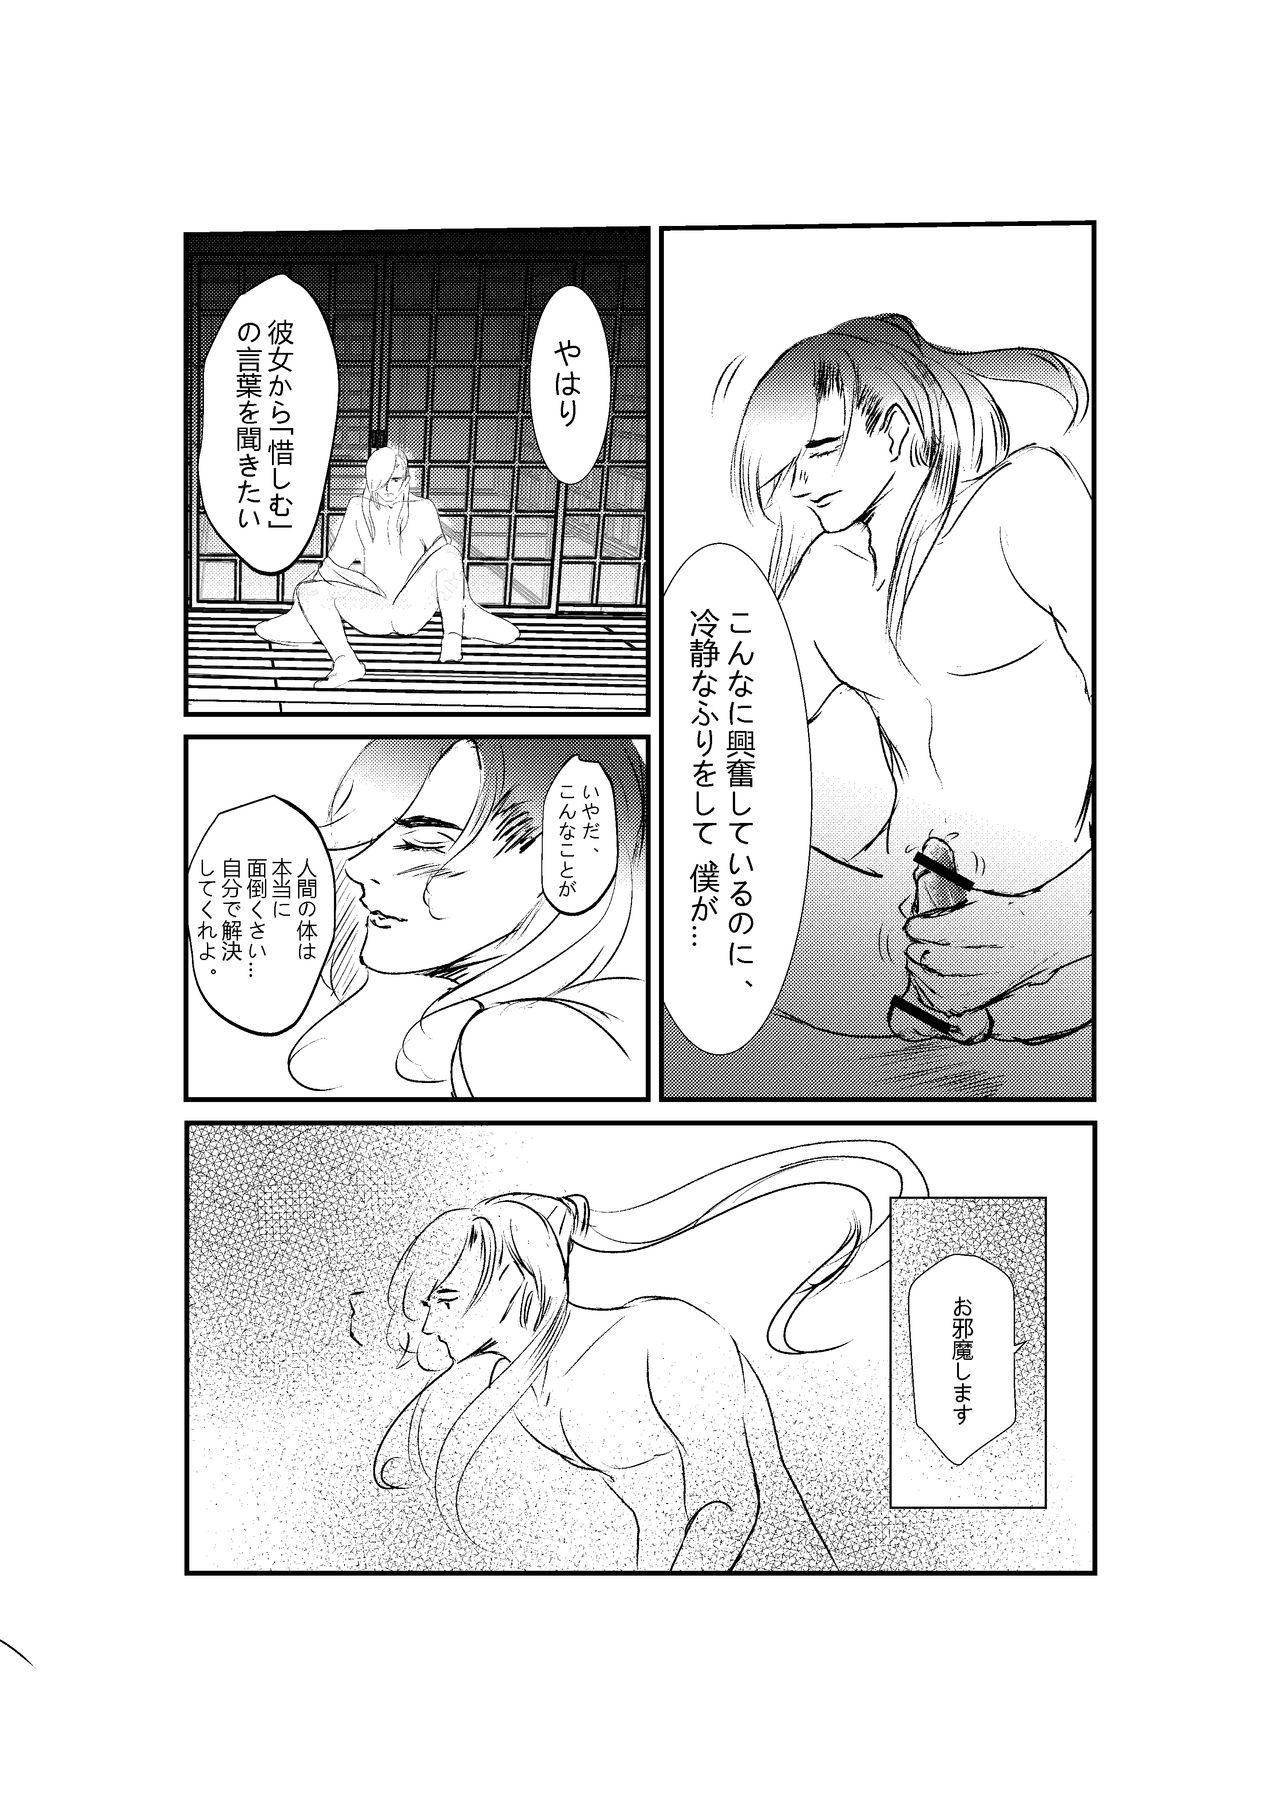 Girlongirl 刀の花嫁 - Touken ranbu Hairy - Page 6